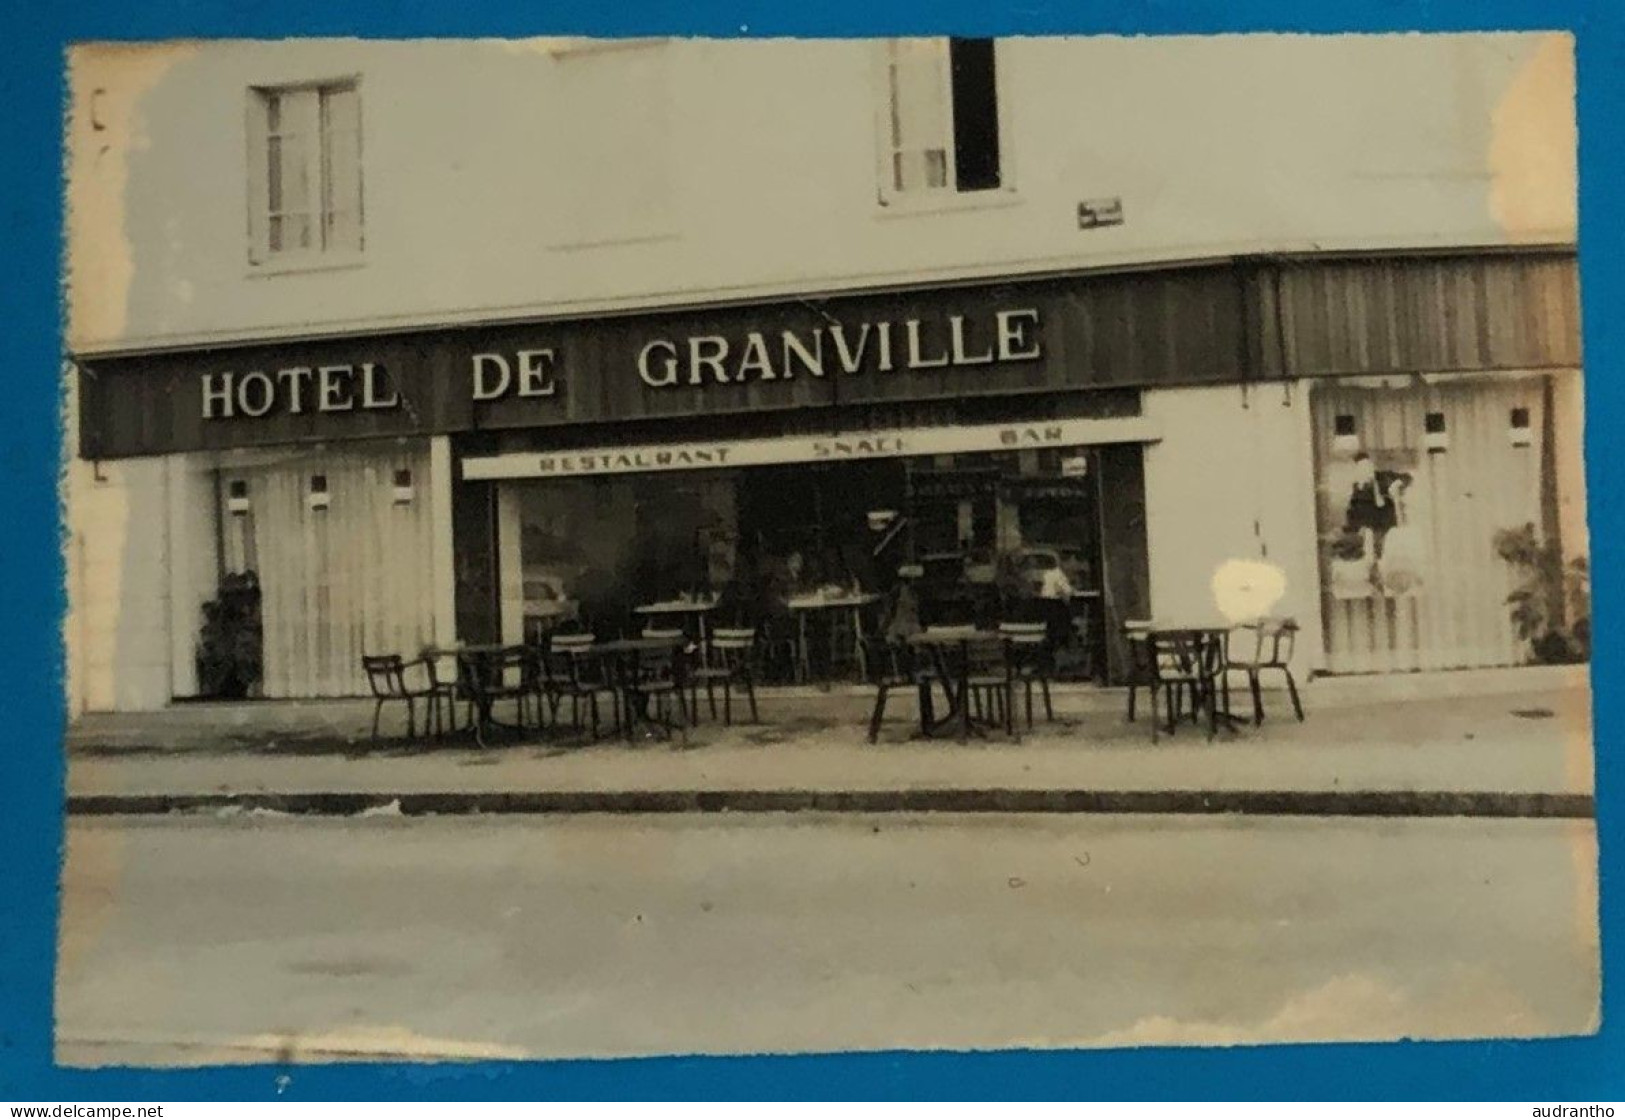 Ancien Cendrier Vide Poche En Verre HOTEL DE GRANVILLE Restaurant Snack Bar - Cendriers